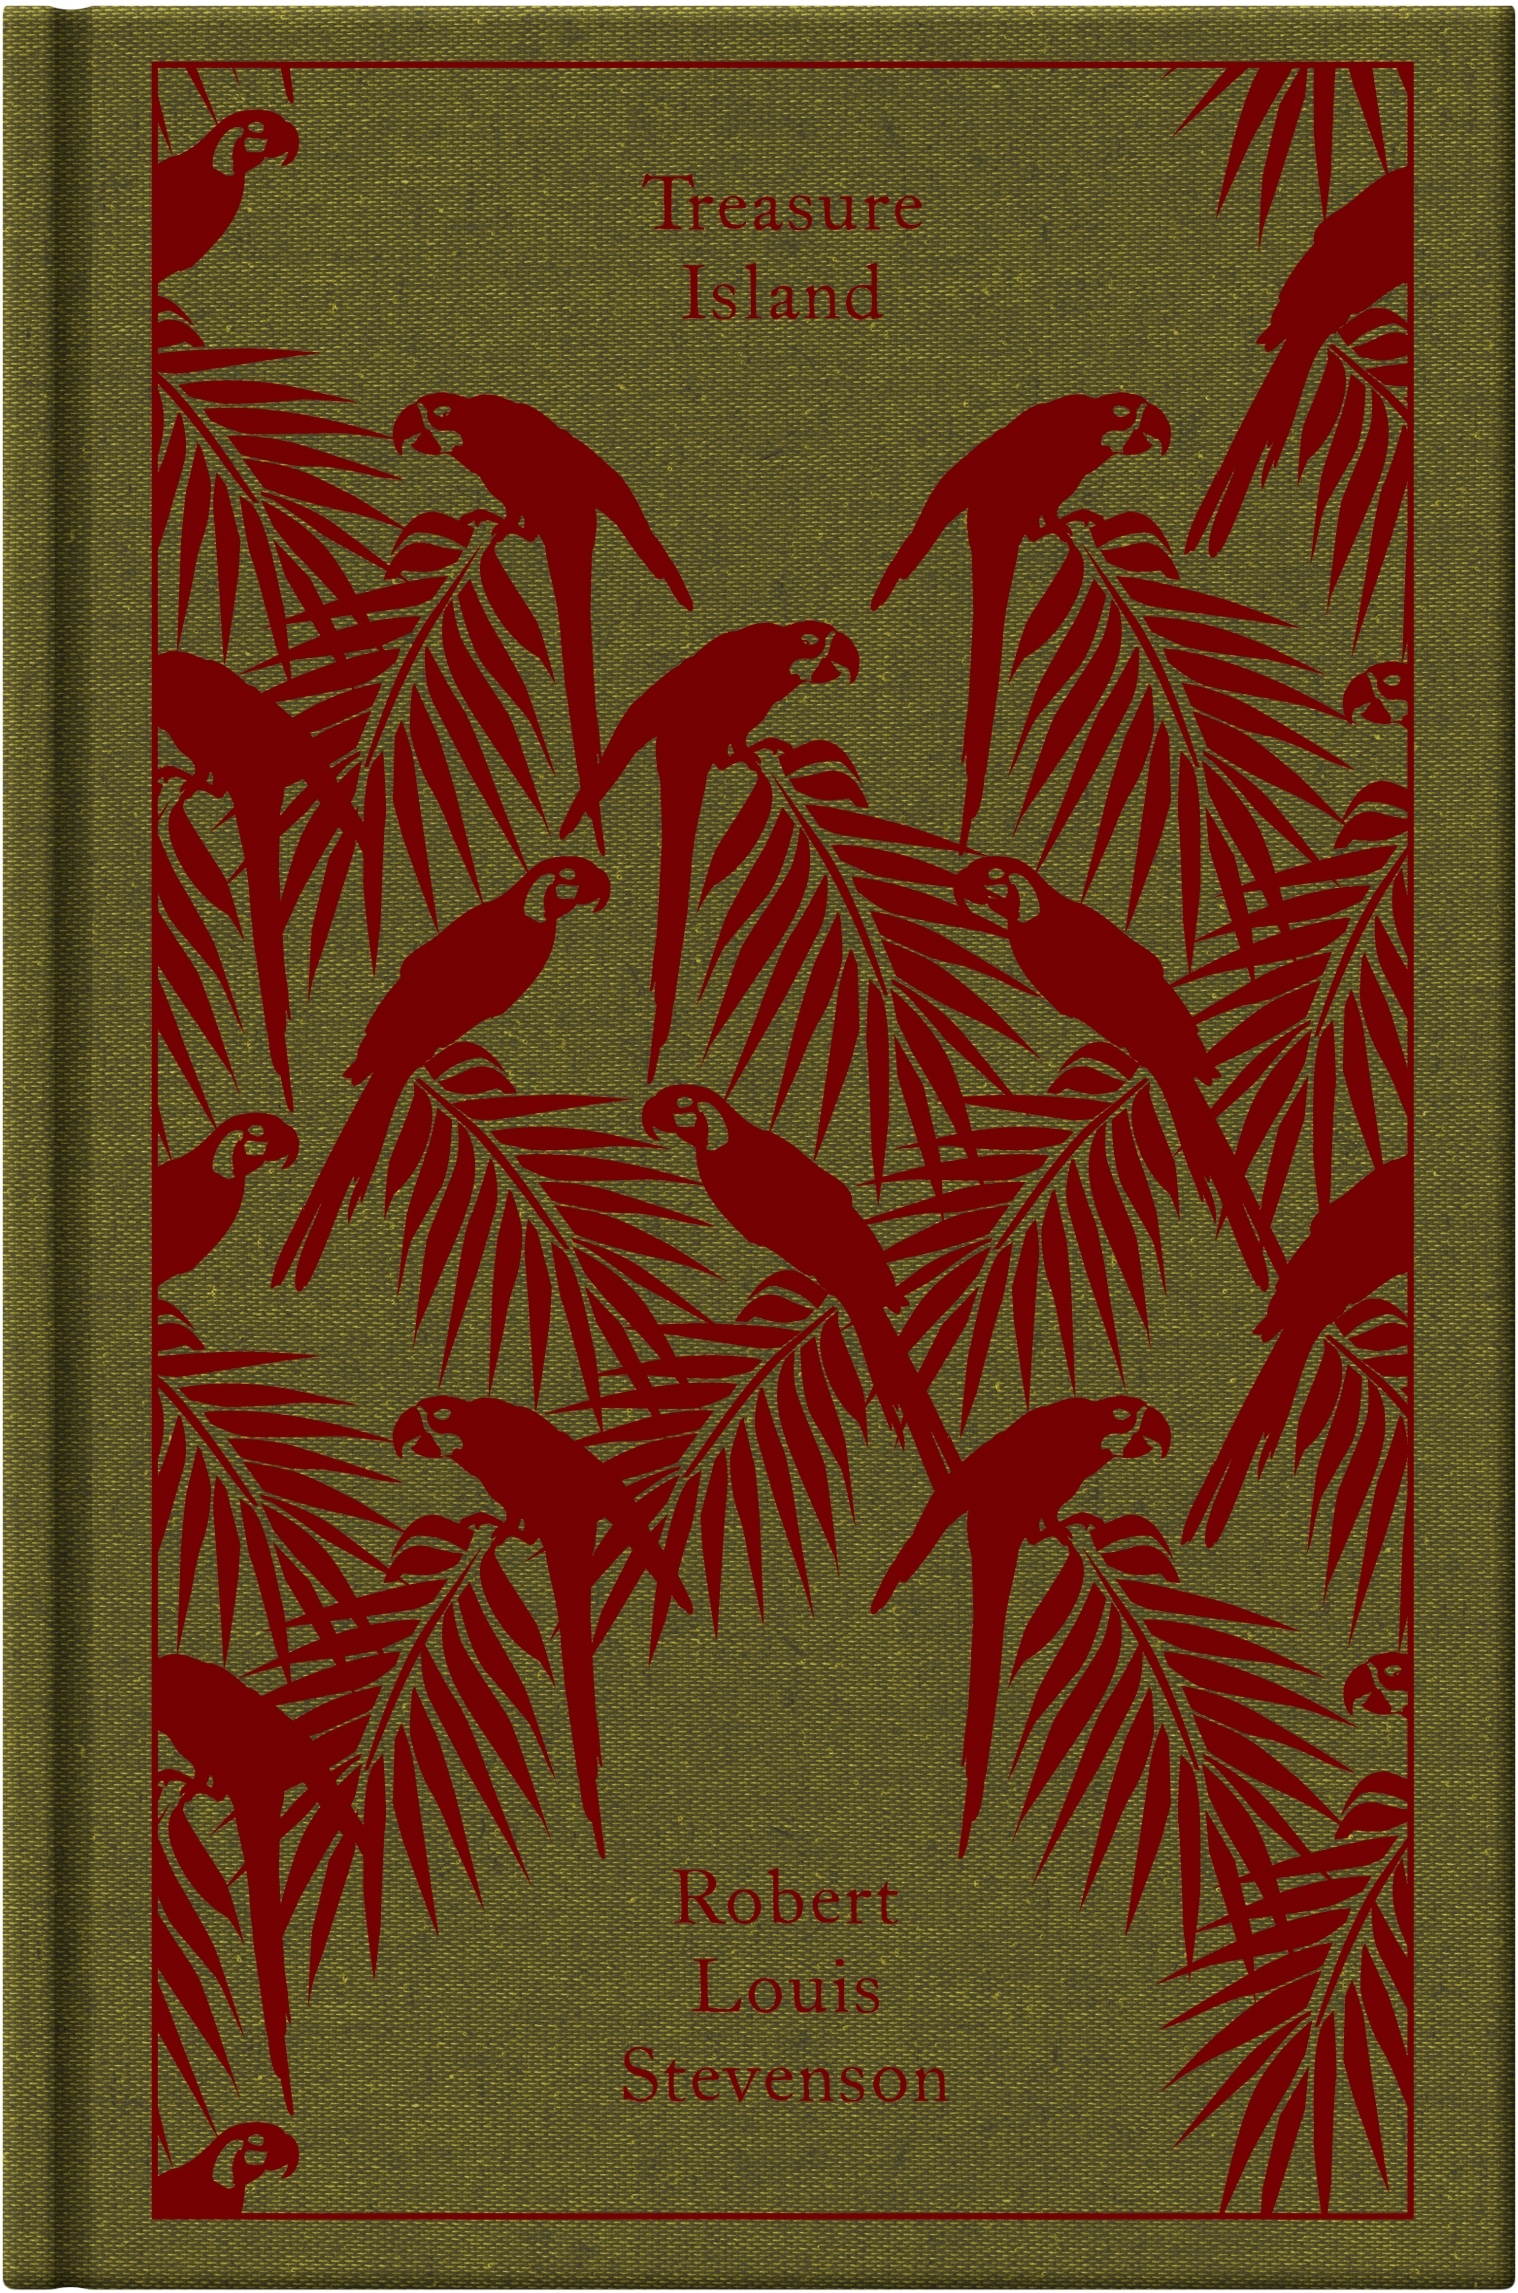 Book “Treasure Island” by Robert Louis Stevenson — October 1, 2009